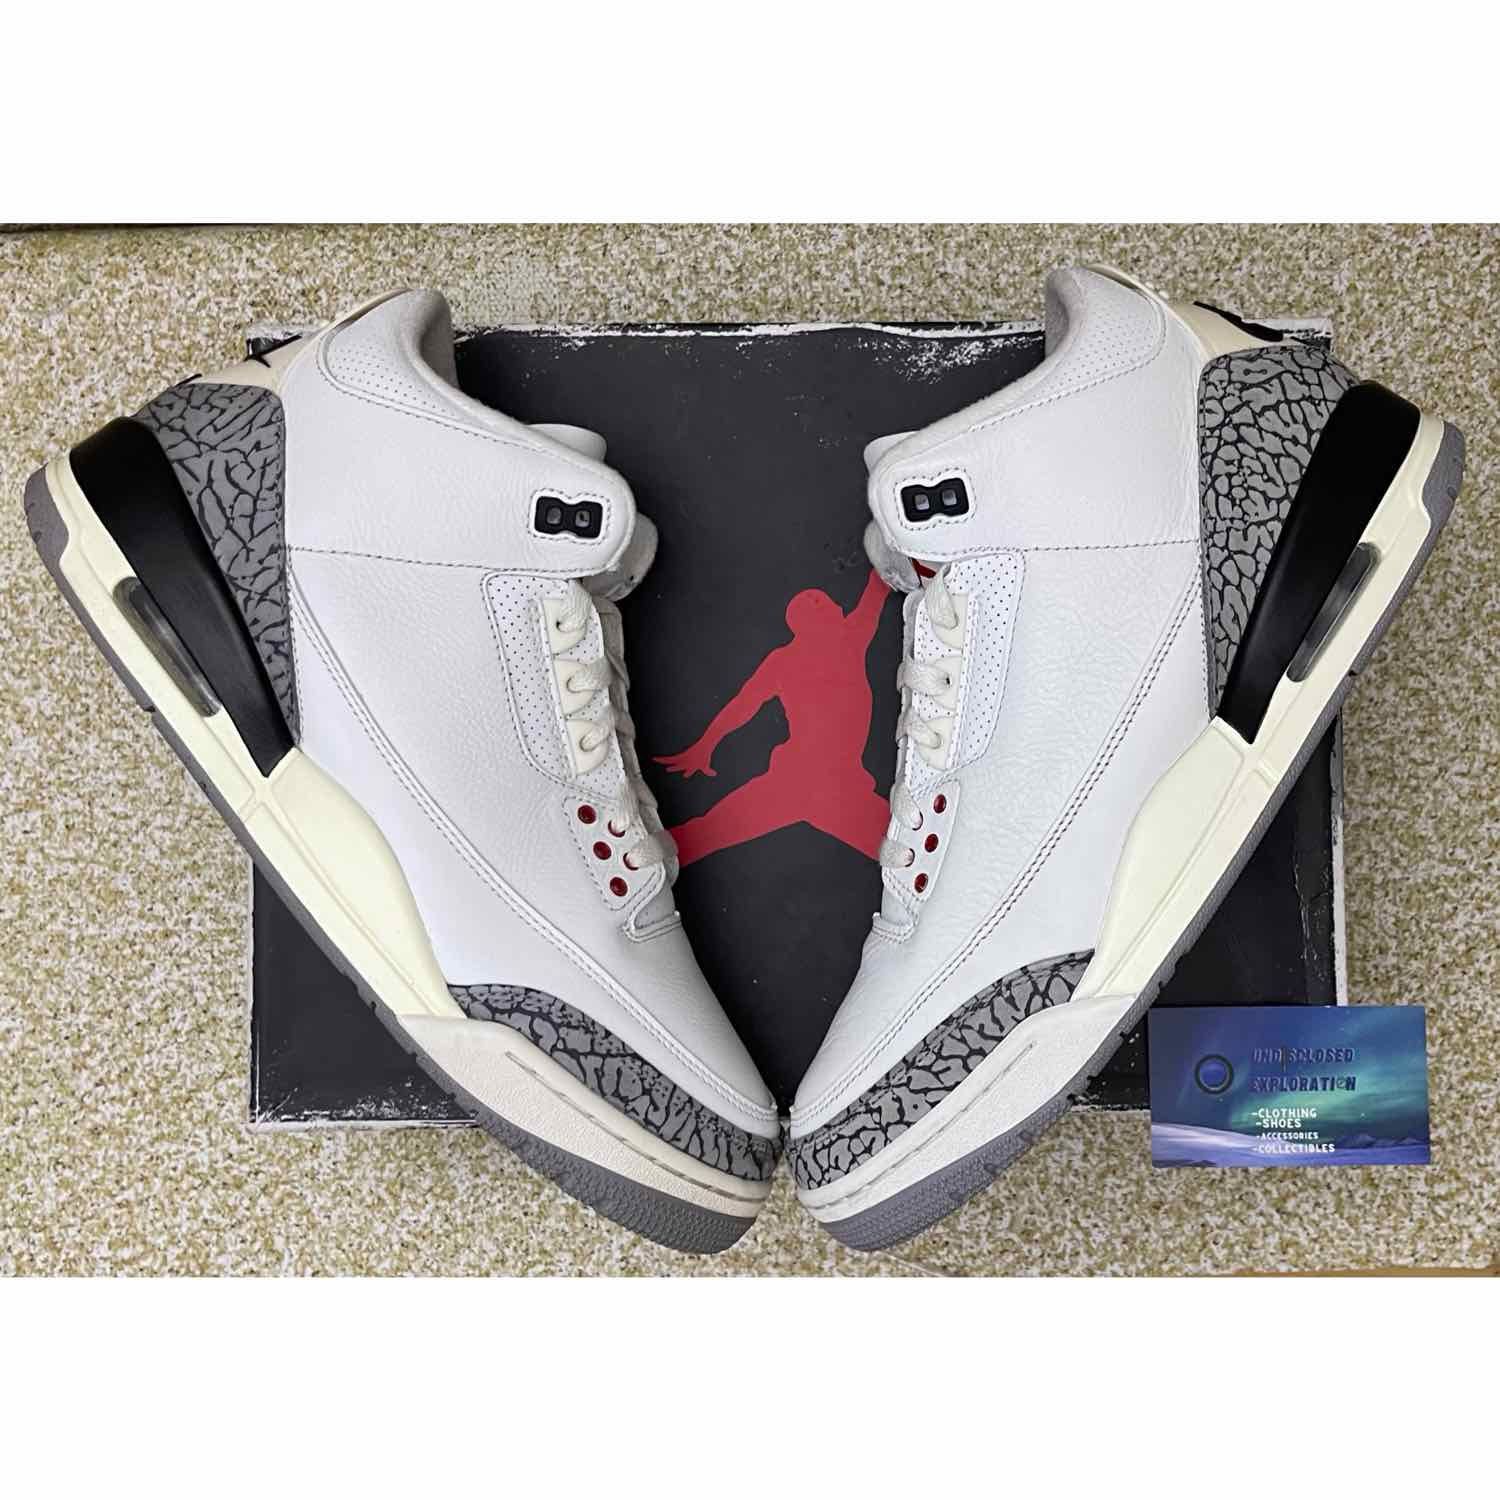 Nike Air Jordan 3 White Cement Size 10.5 Men